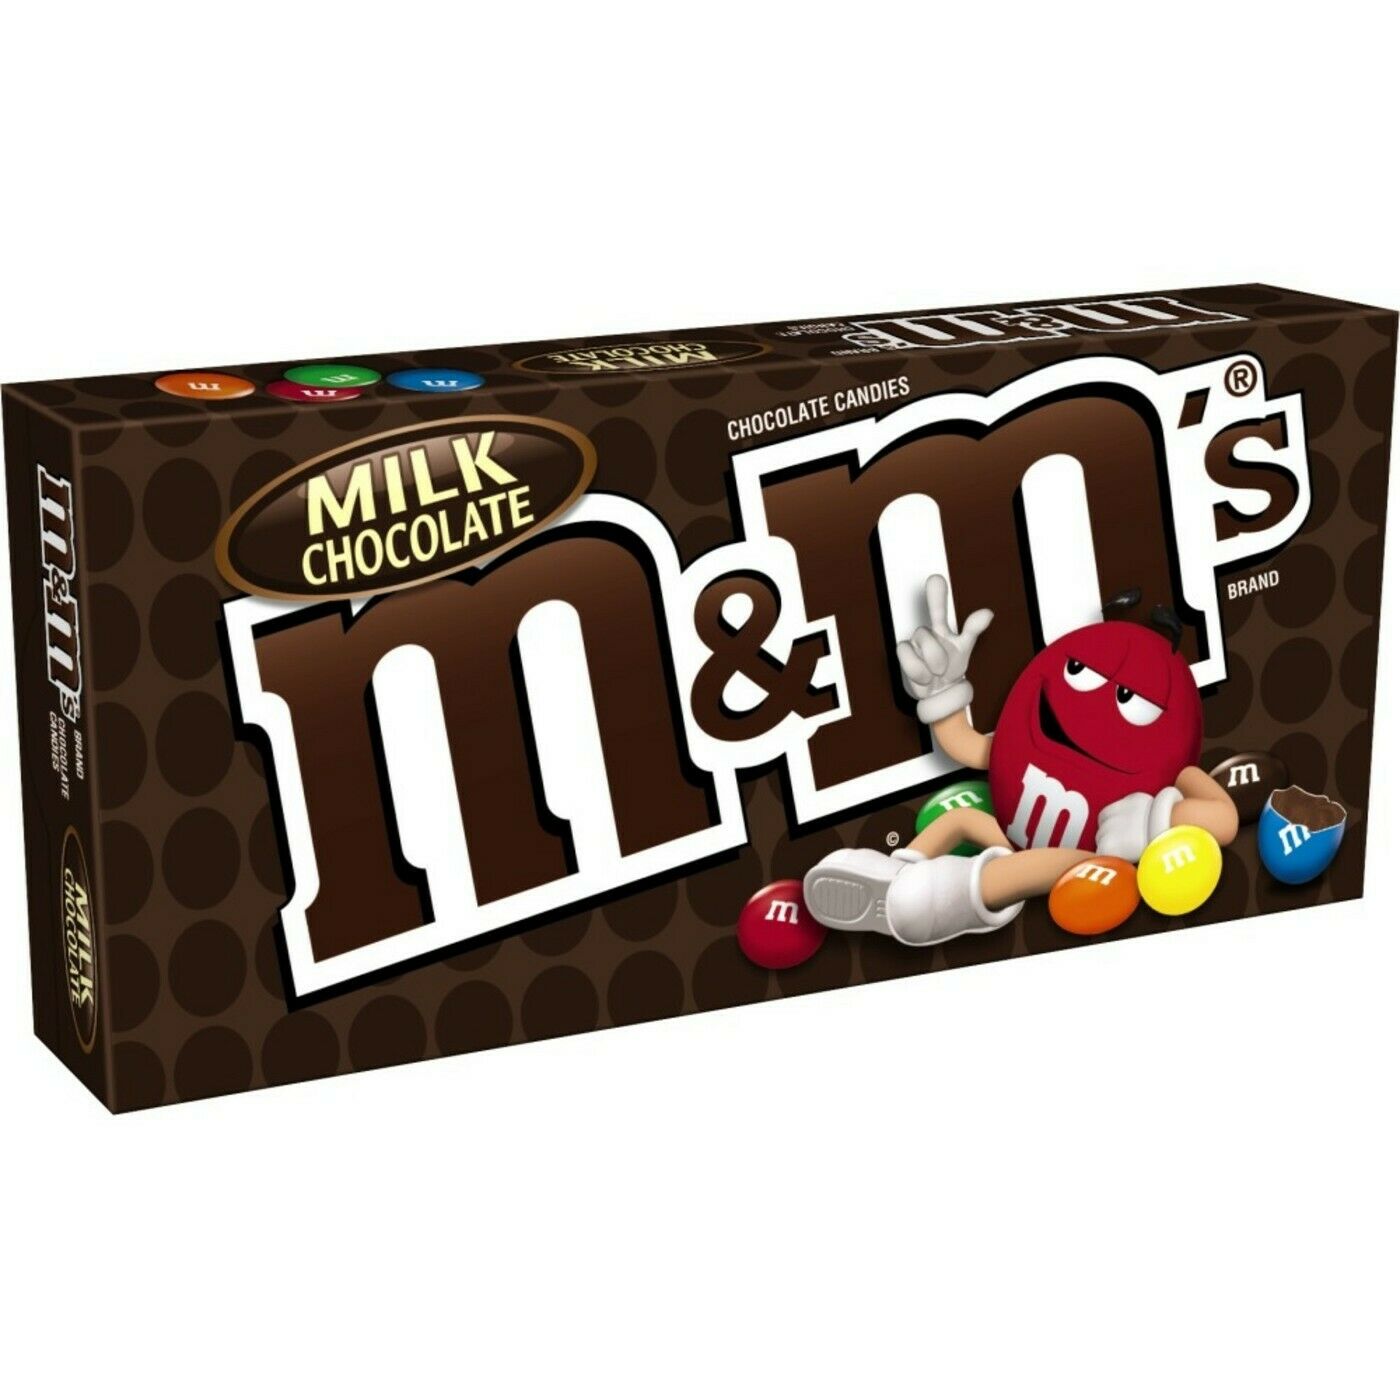 chocolate m&m